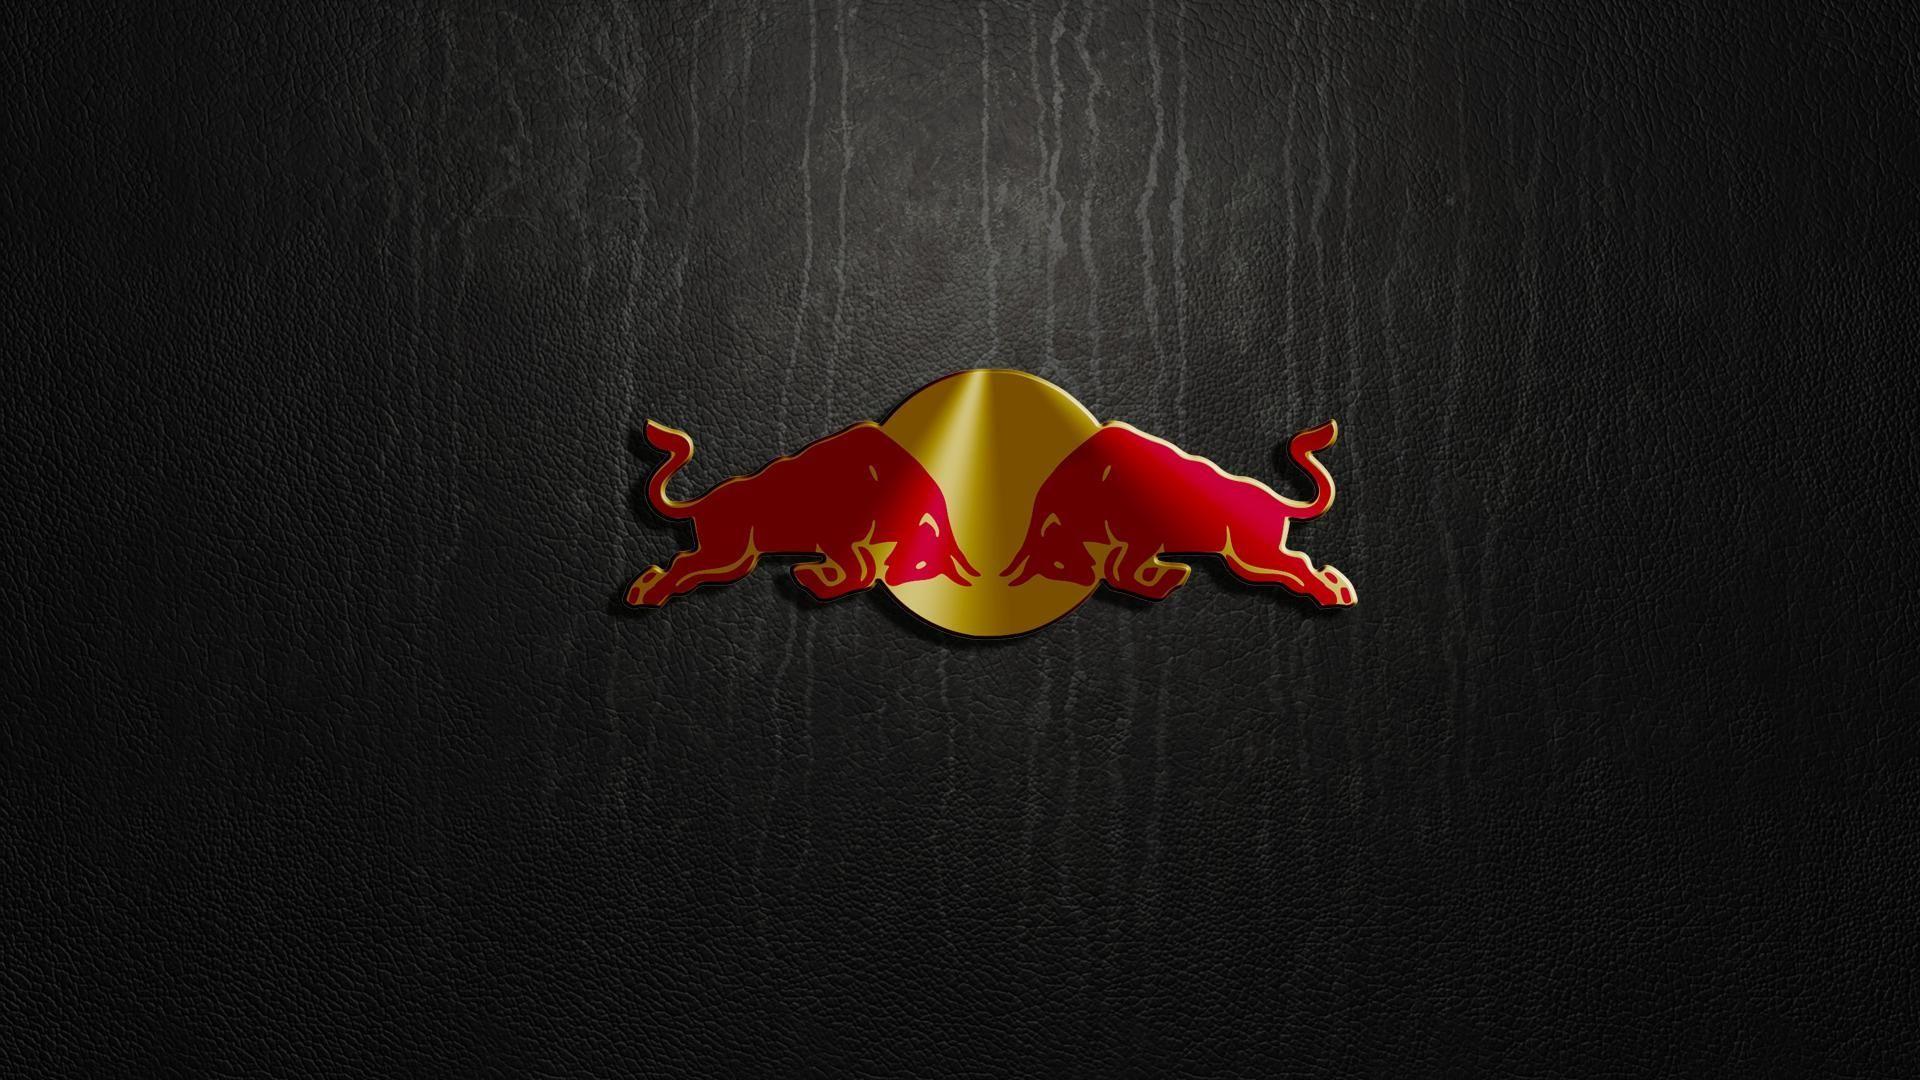 Red Bull Logo wallpaper. HD Wallpaper. Bulls